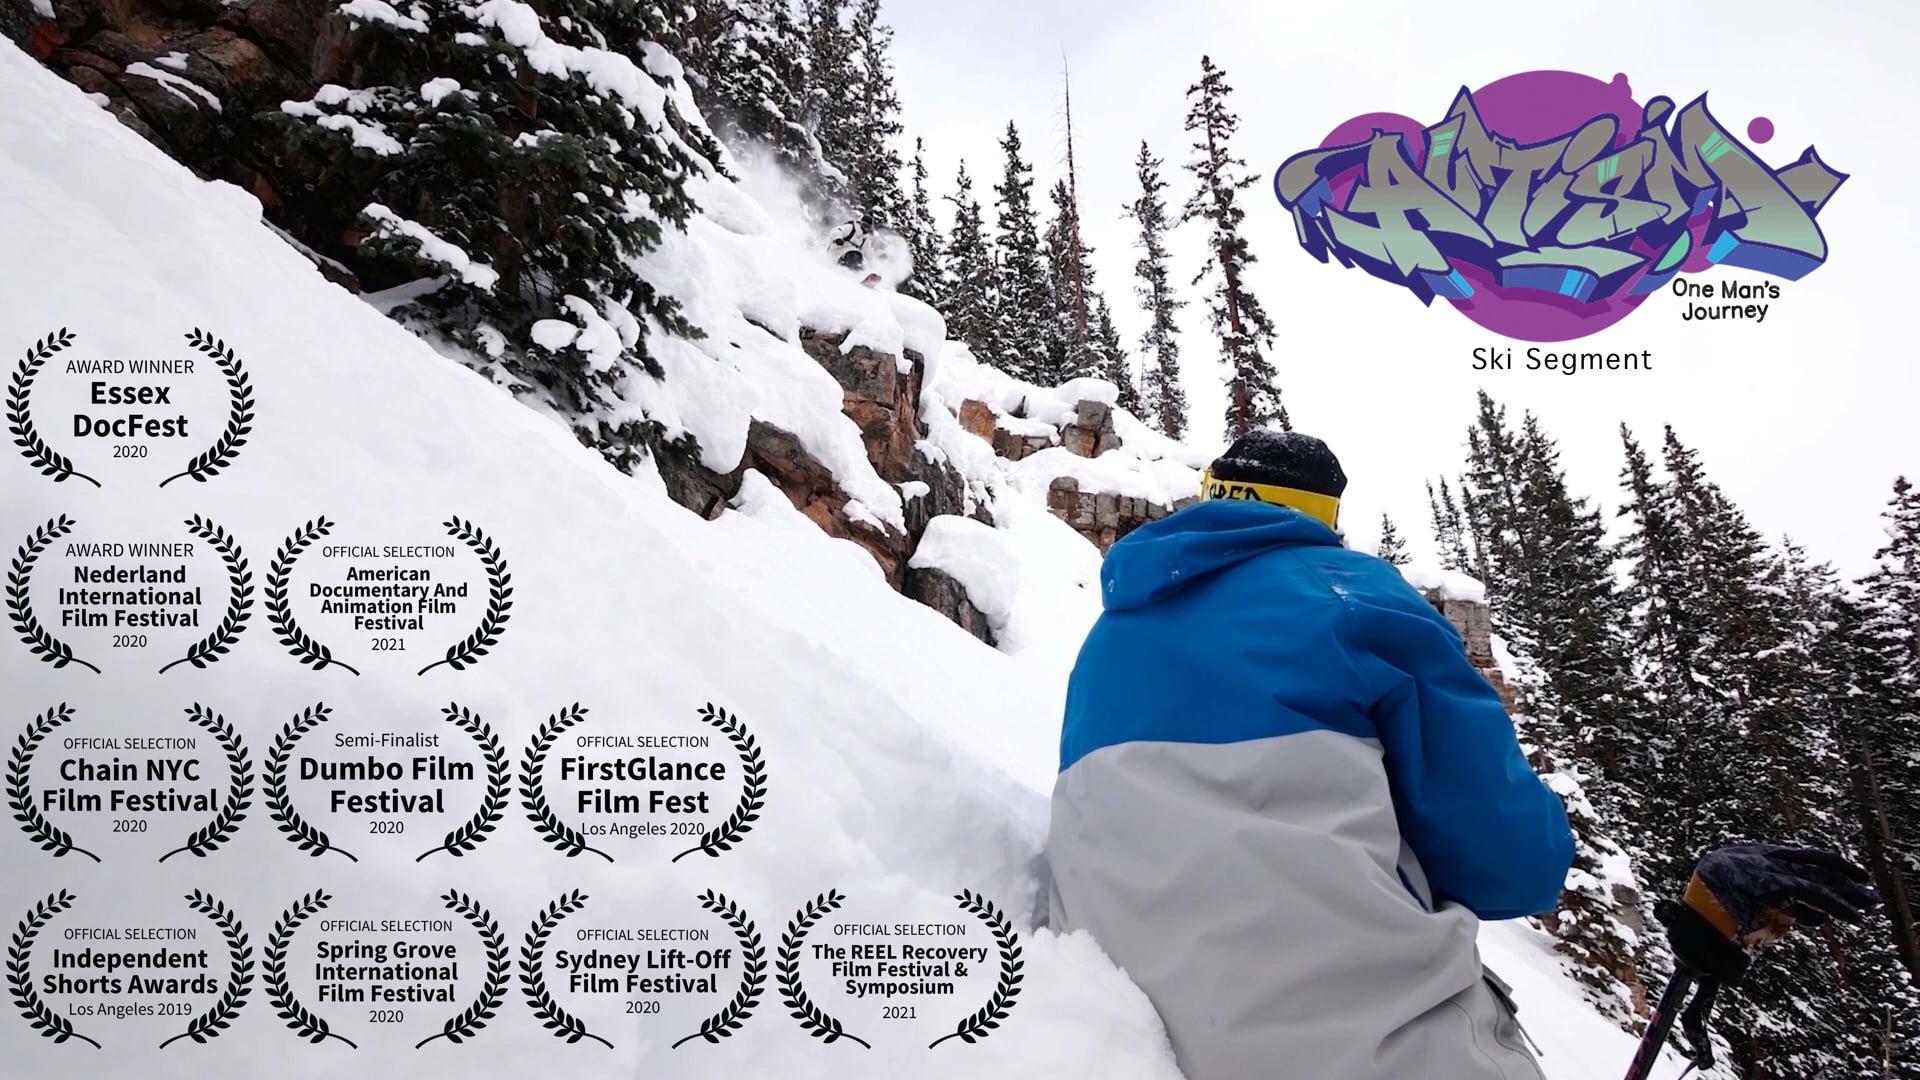 Autism: One Man's Journey - Ski Segment